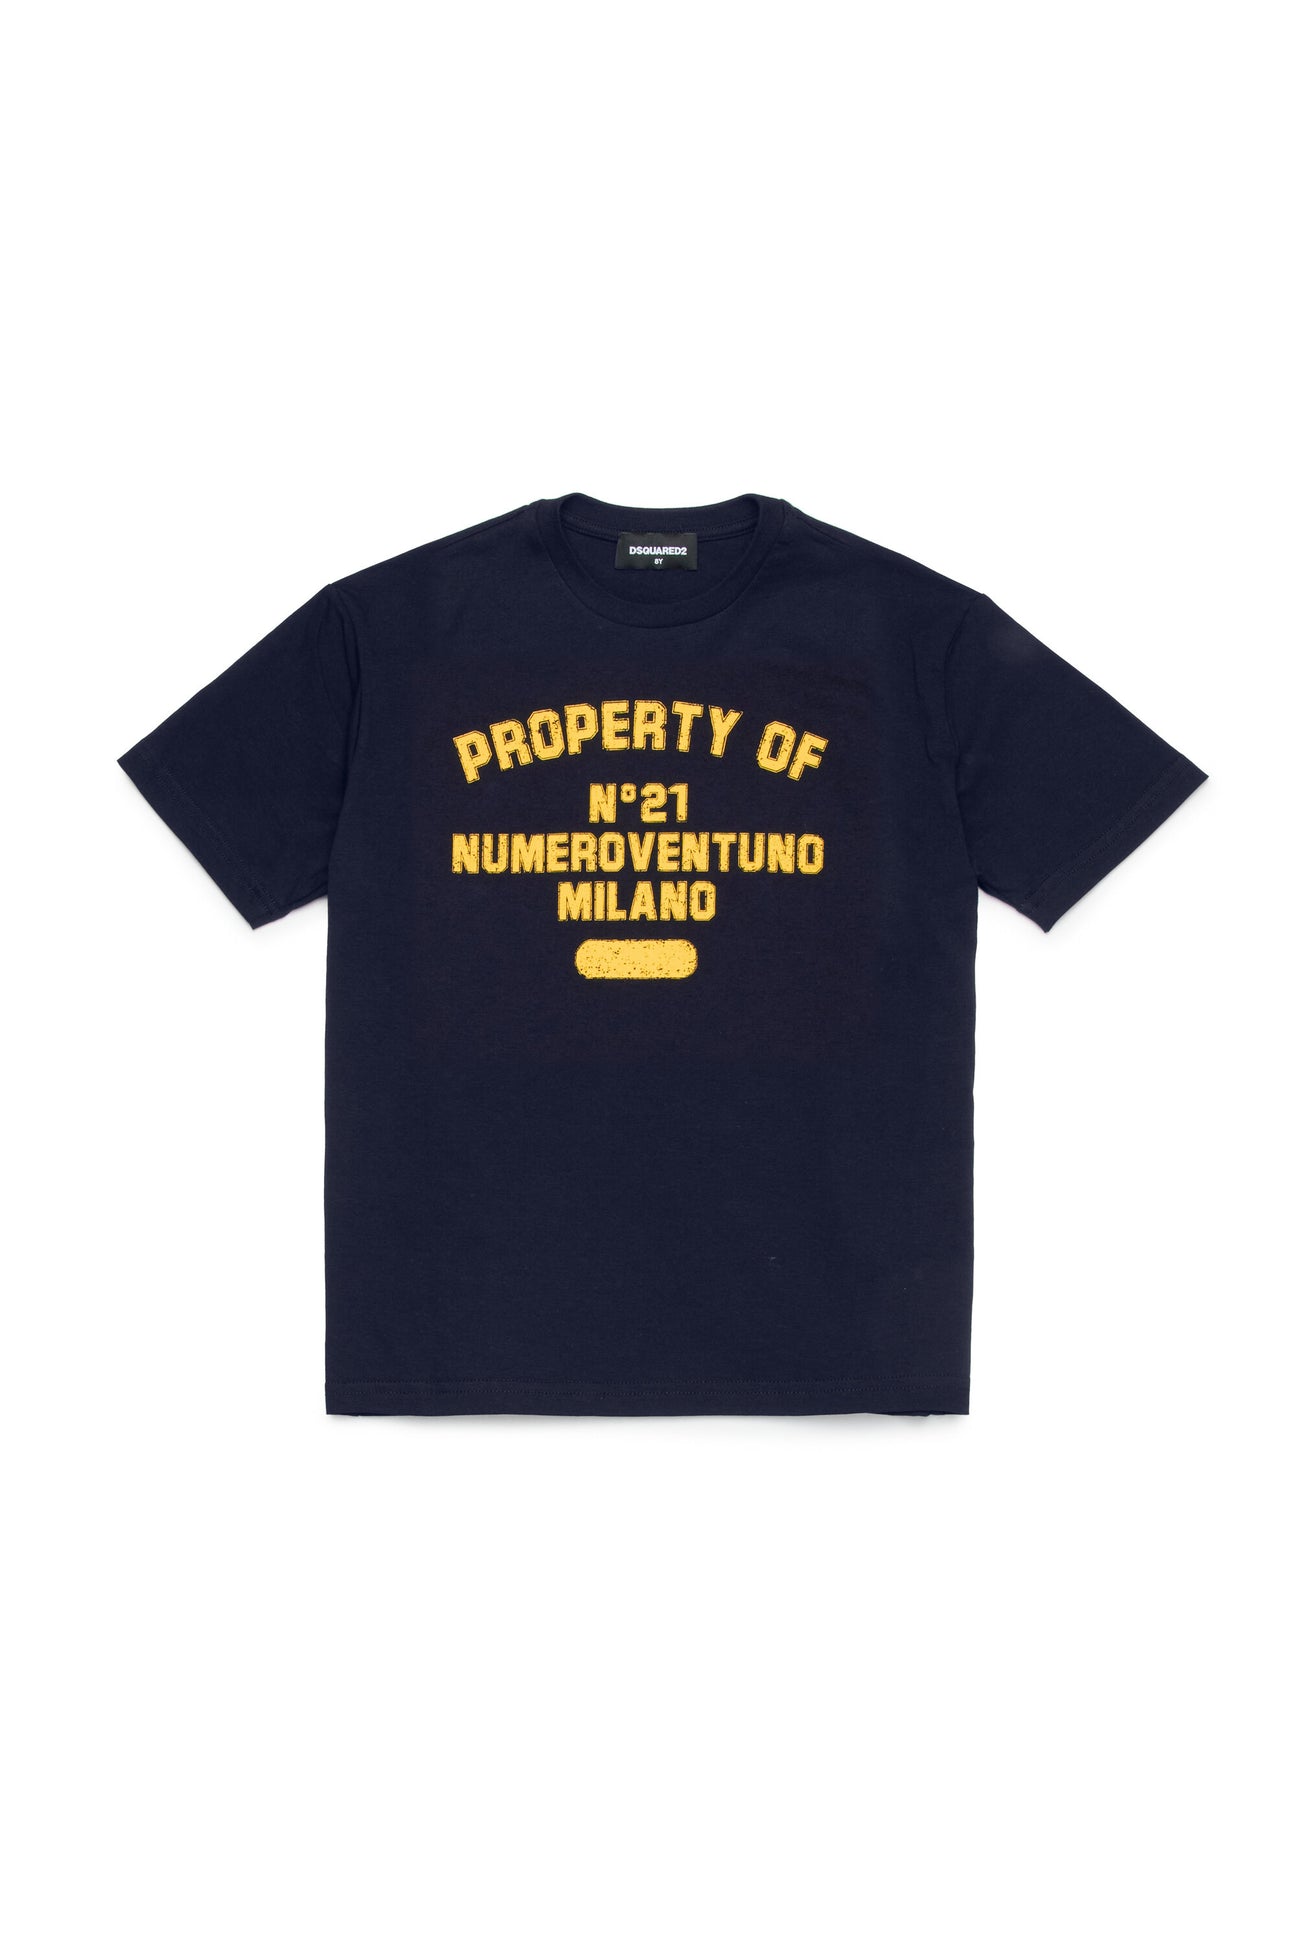 T-shirt con logo Property of N°21 